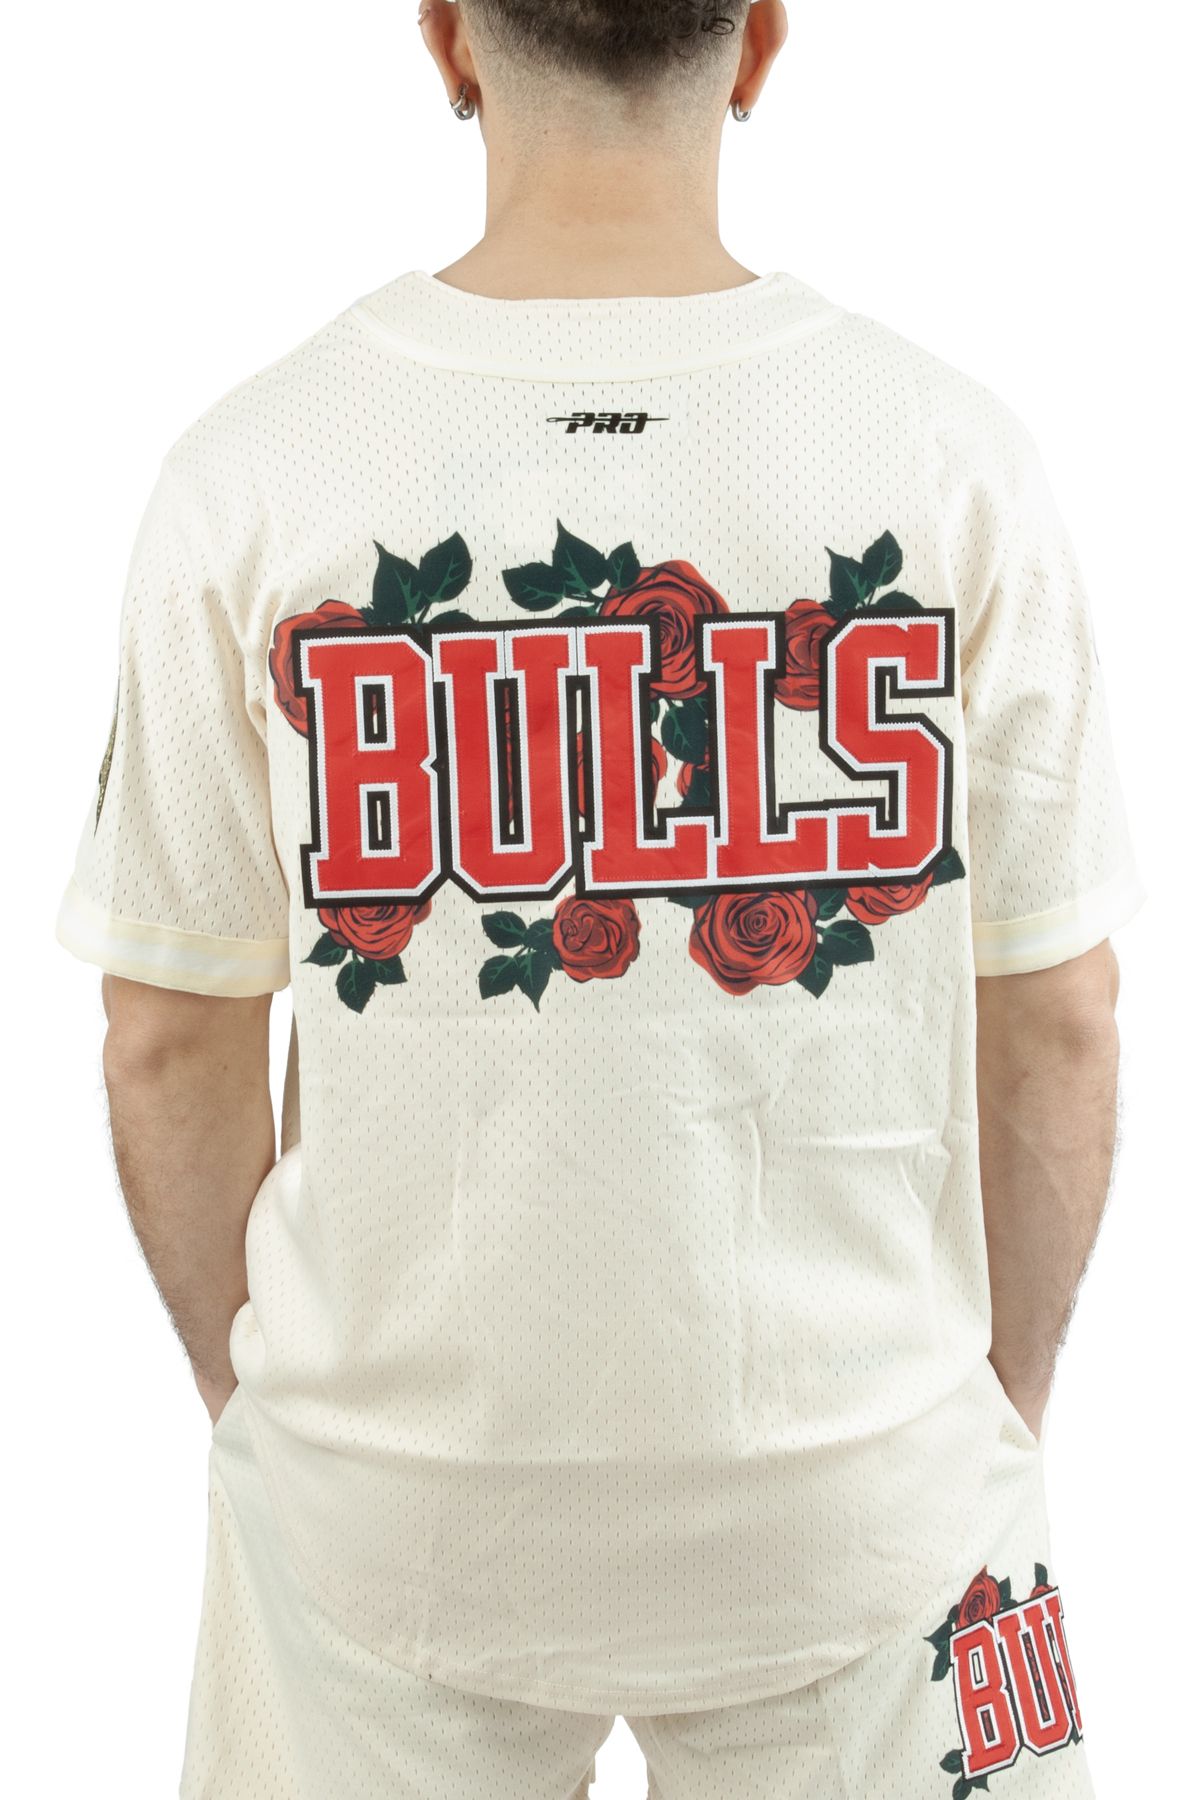 bulls baseball jersey